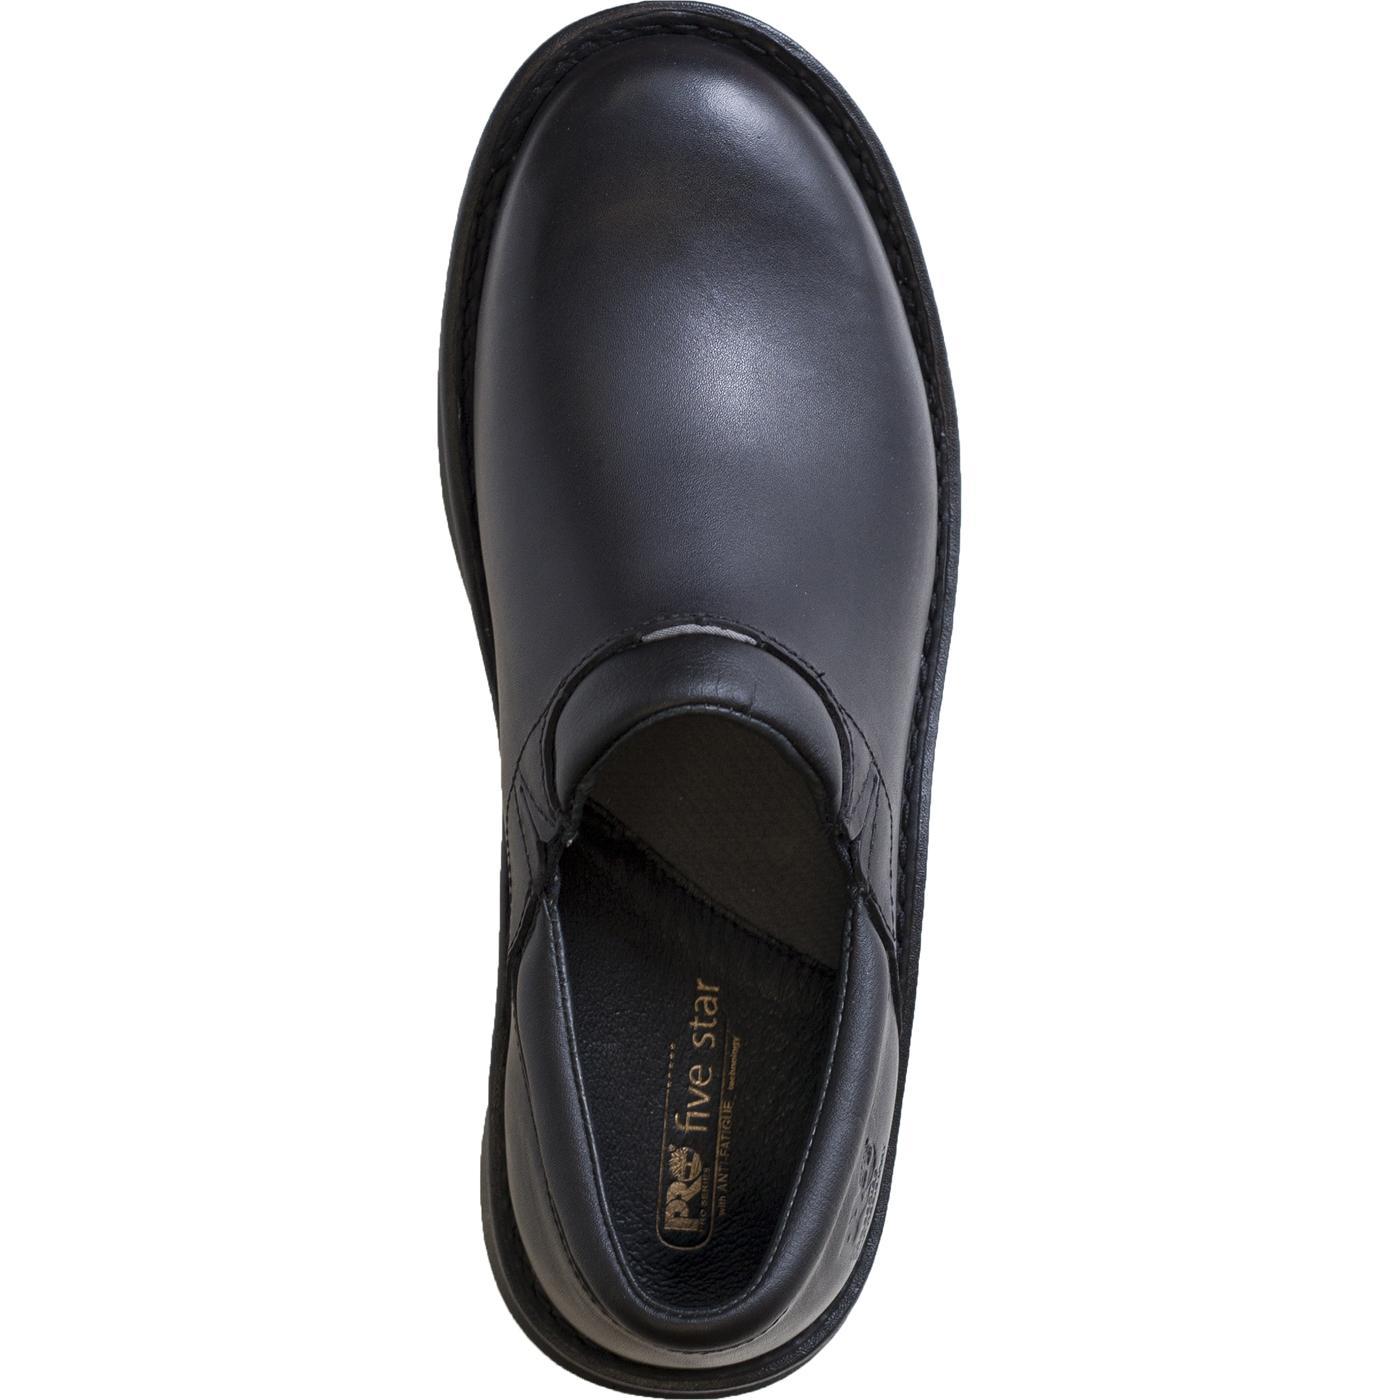 Timberland PRO Men's Slip-Resistant Black Leather Slip-On Shoes, #47598